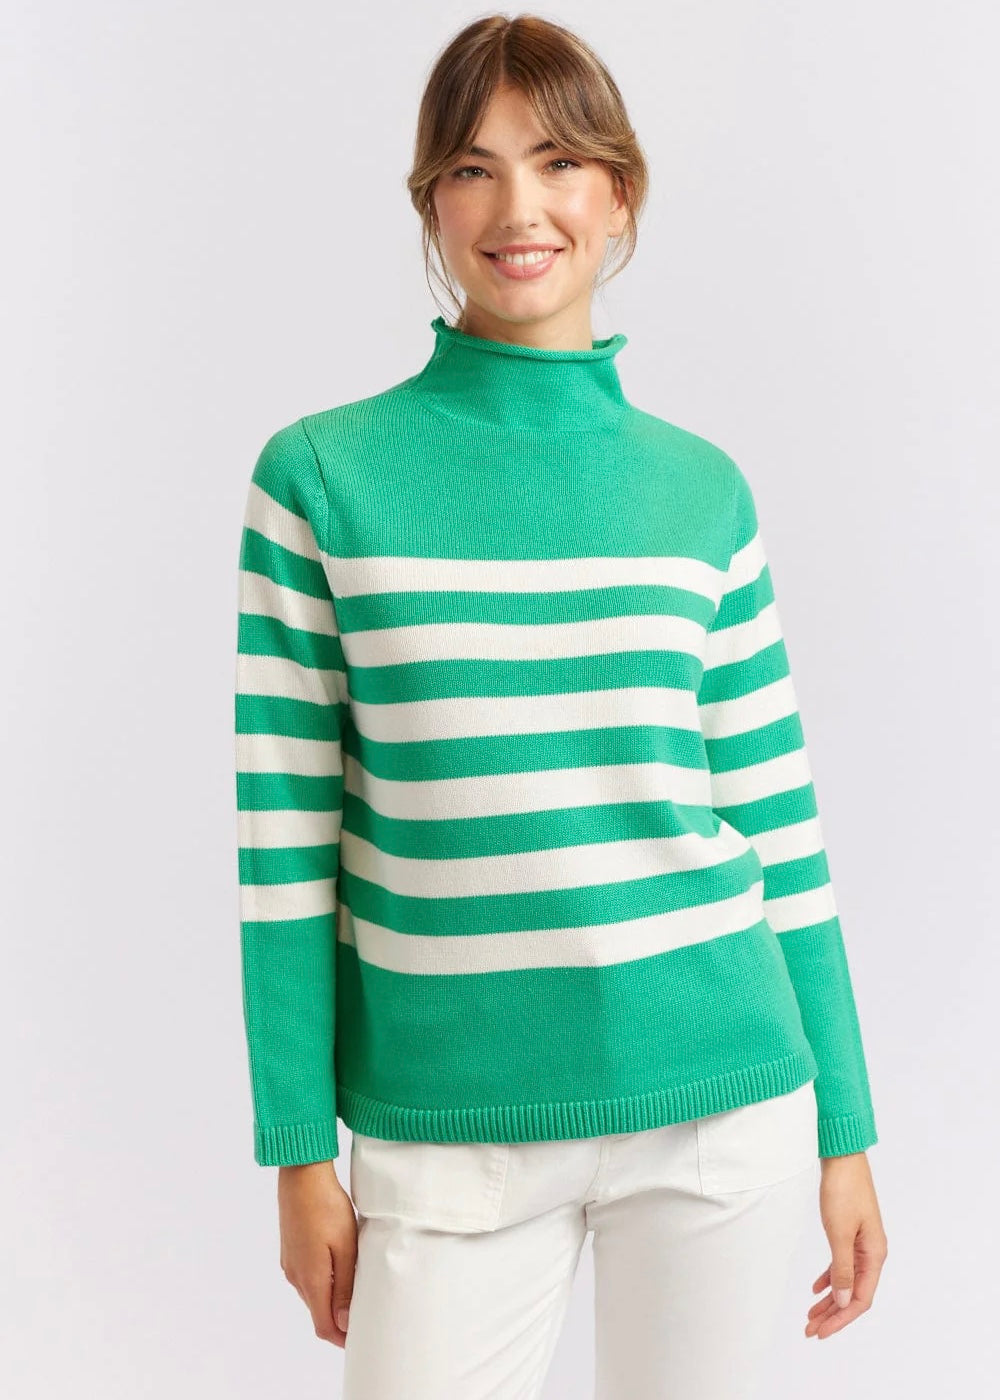 Sorrel Sweater by Alessandra